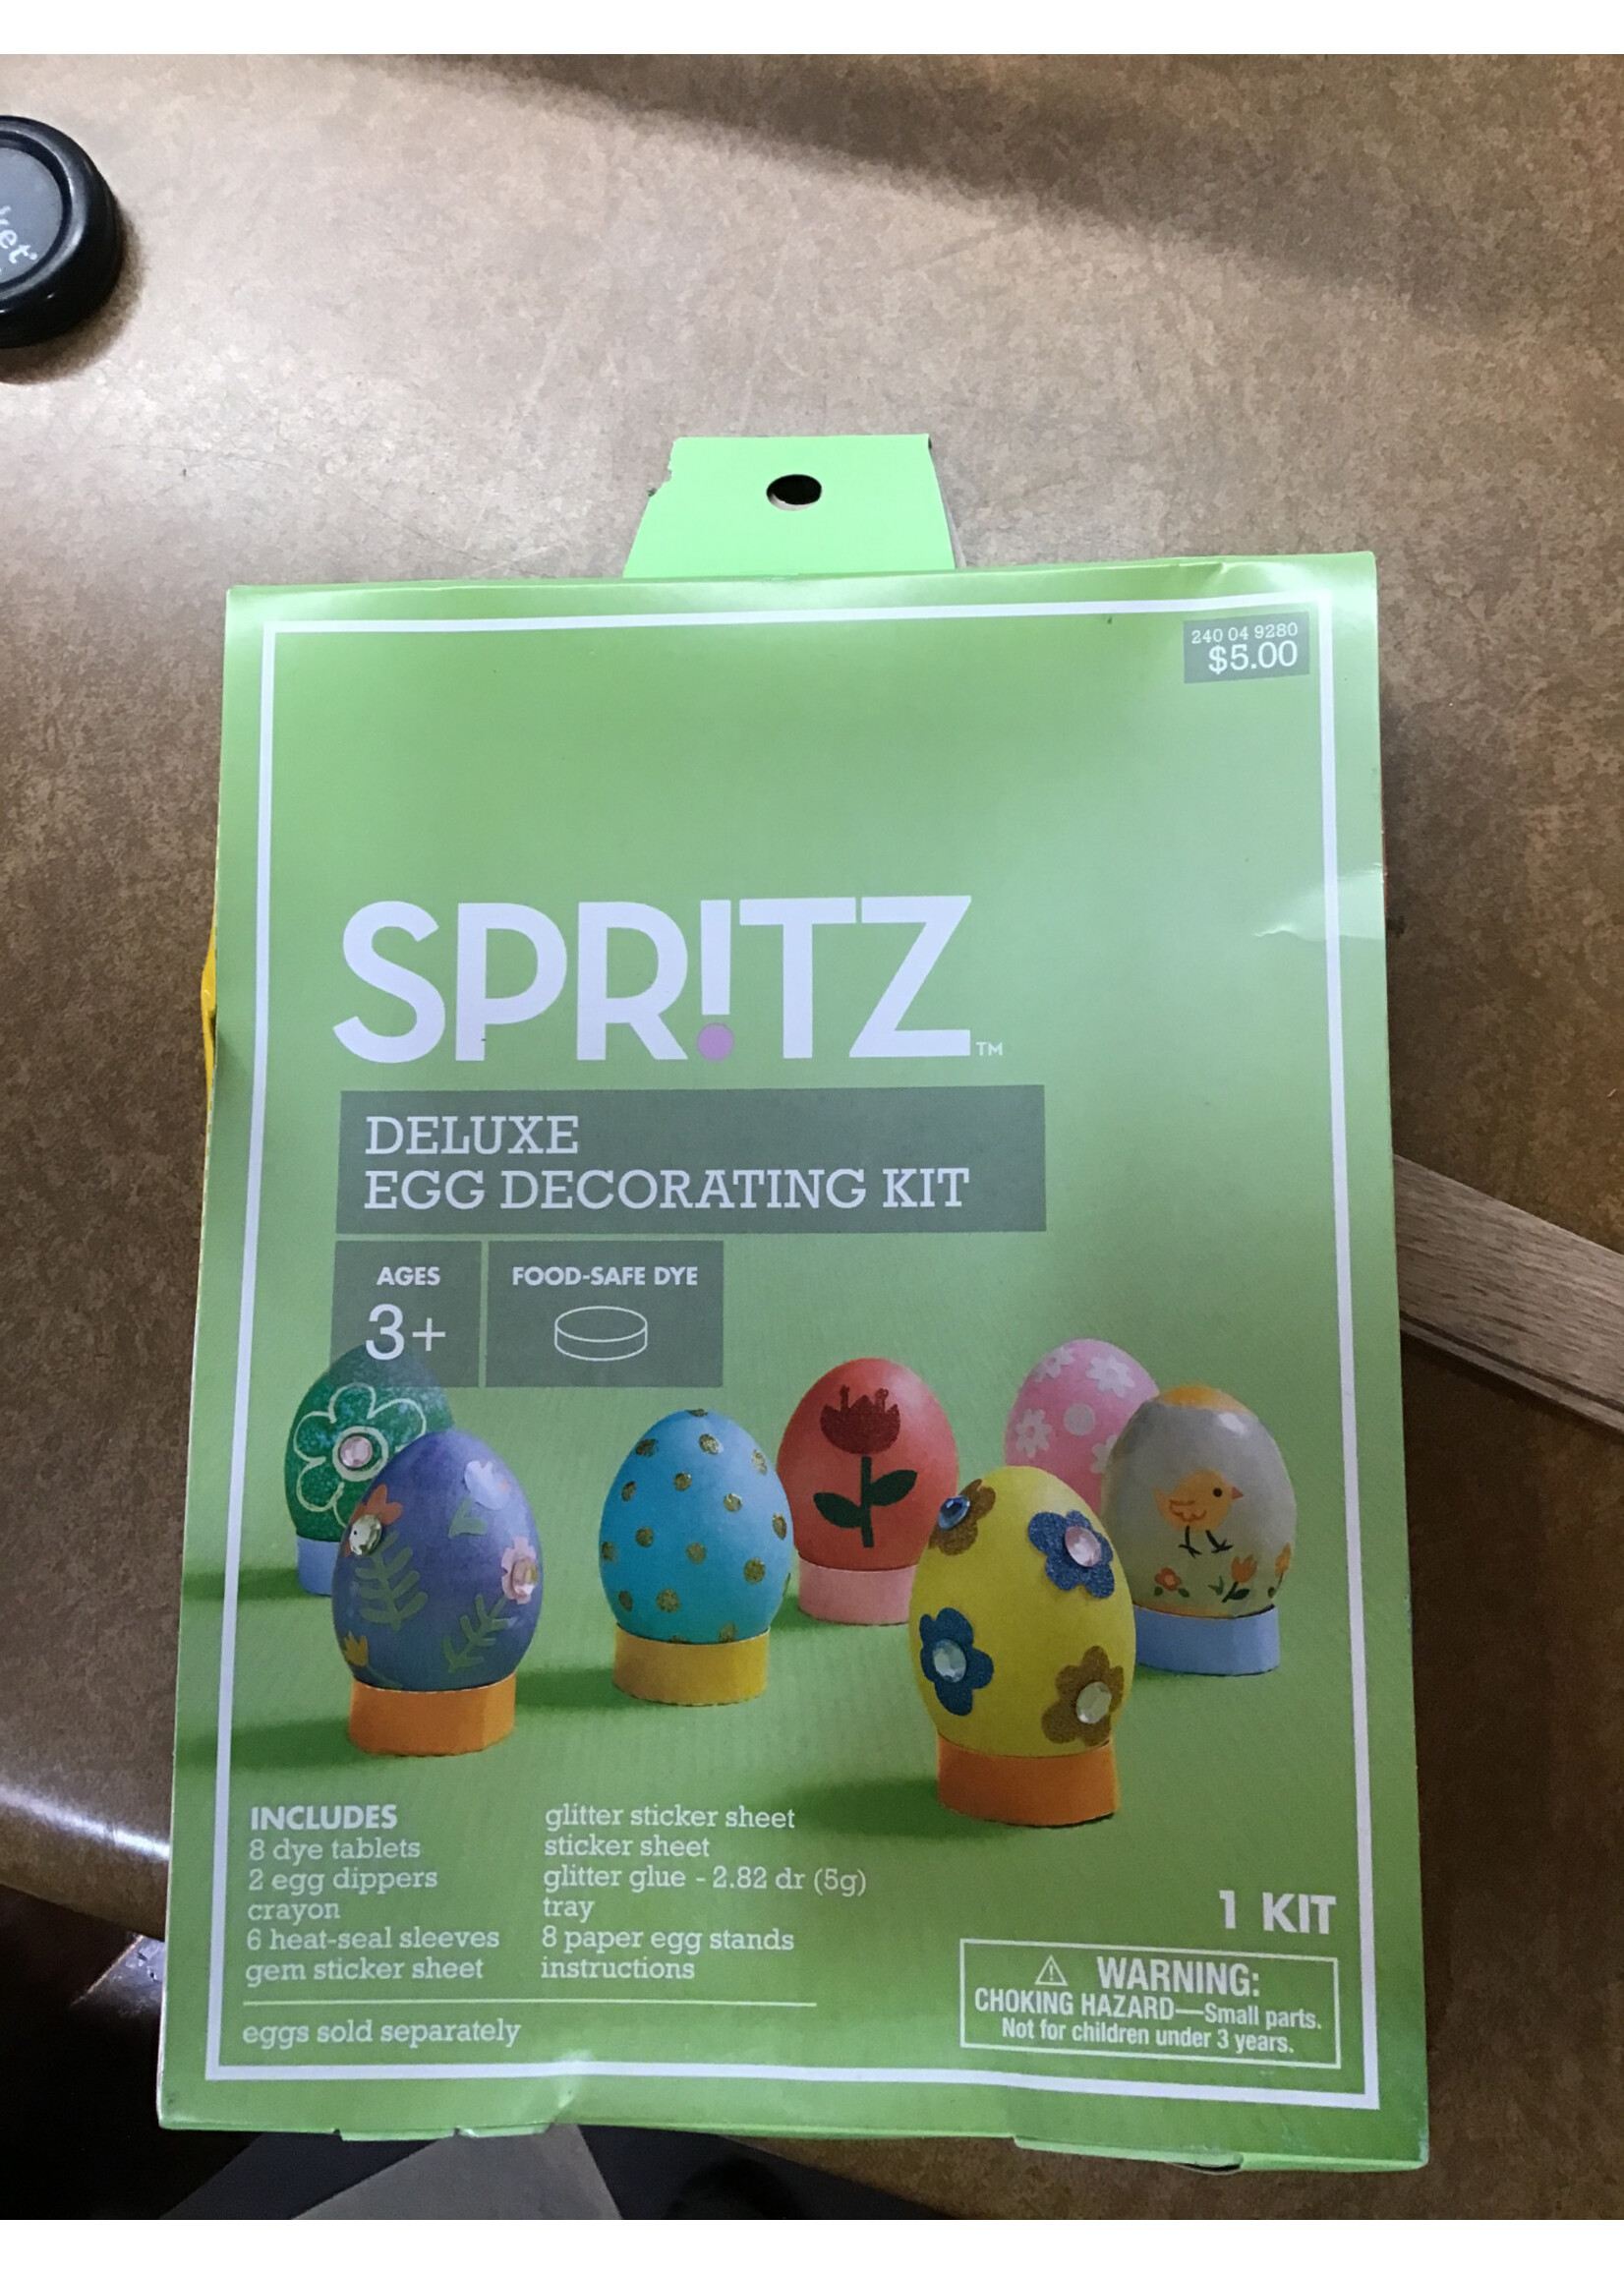 Spritz deluxe egg decorating kit